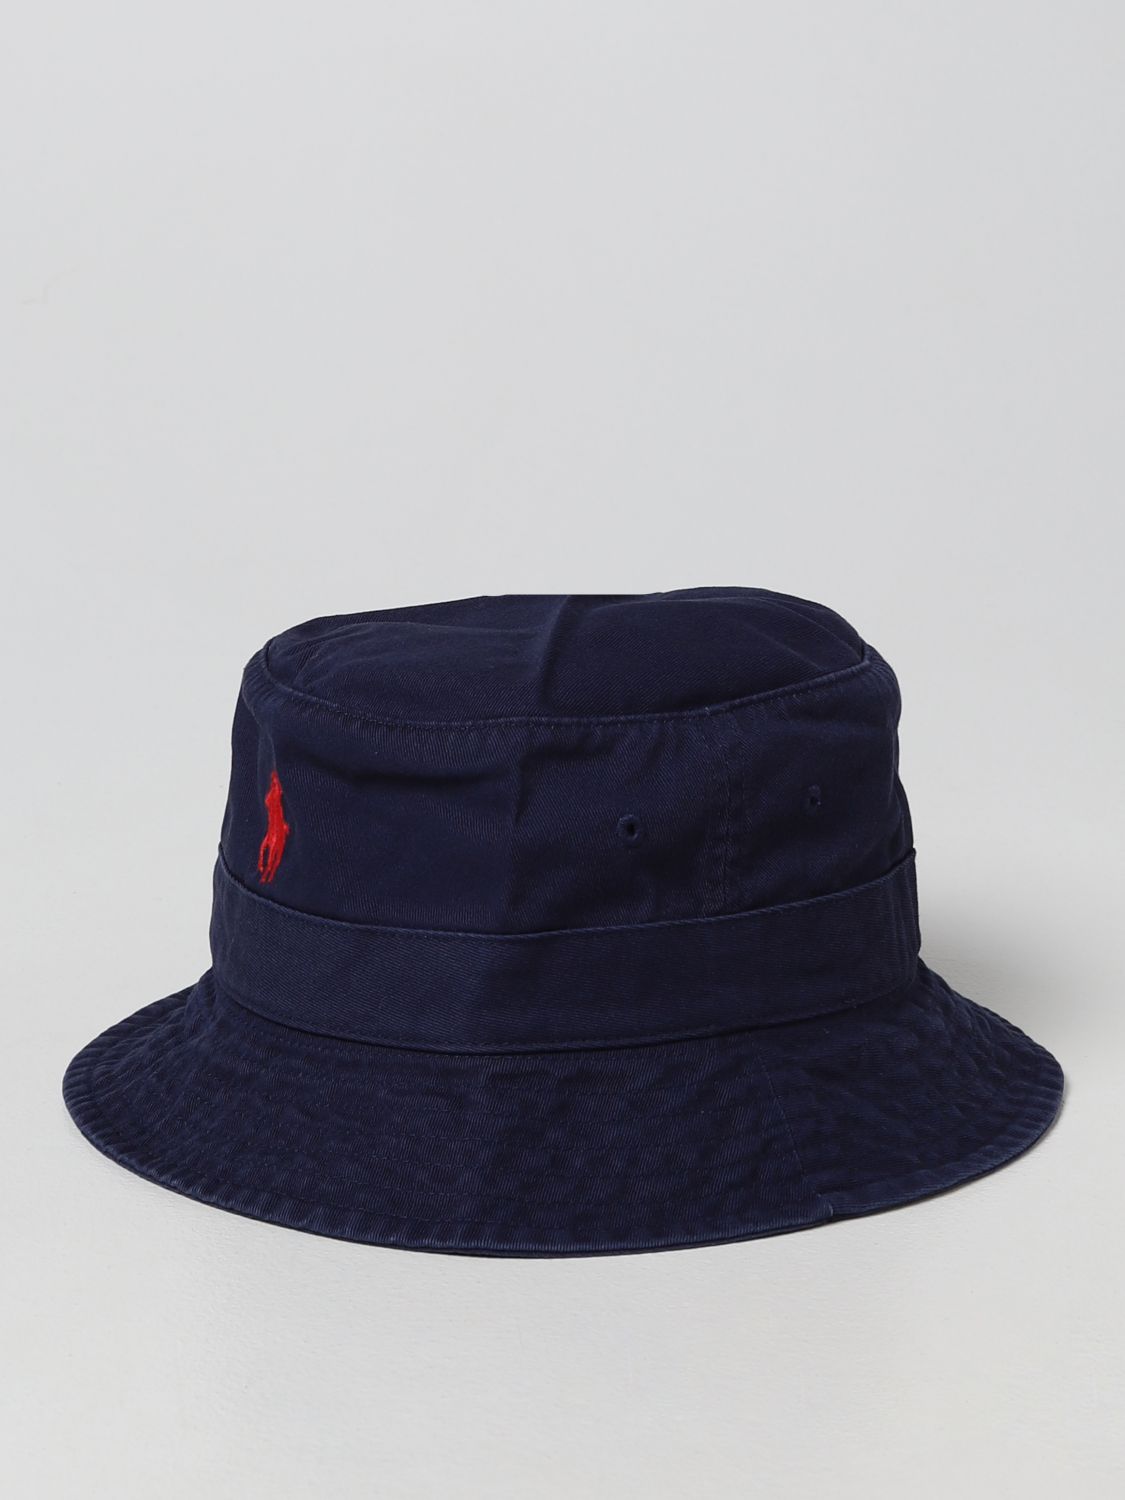 POLO RALPH LAUREN: 帽子 メンズ - ネイビー | 帽子 Polo Ralph Lauren 710847165 GIGLIO.COM